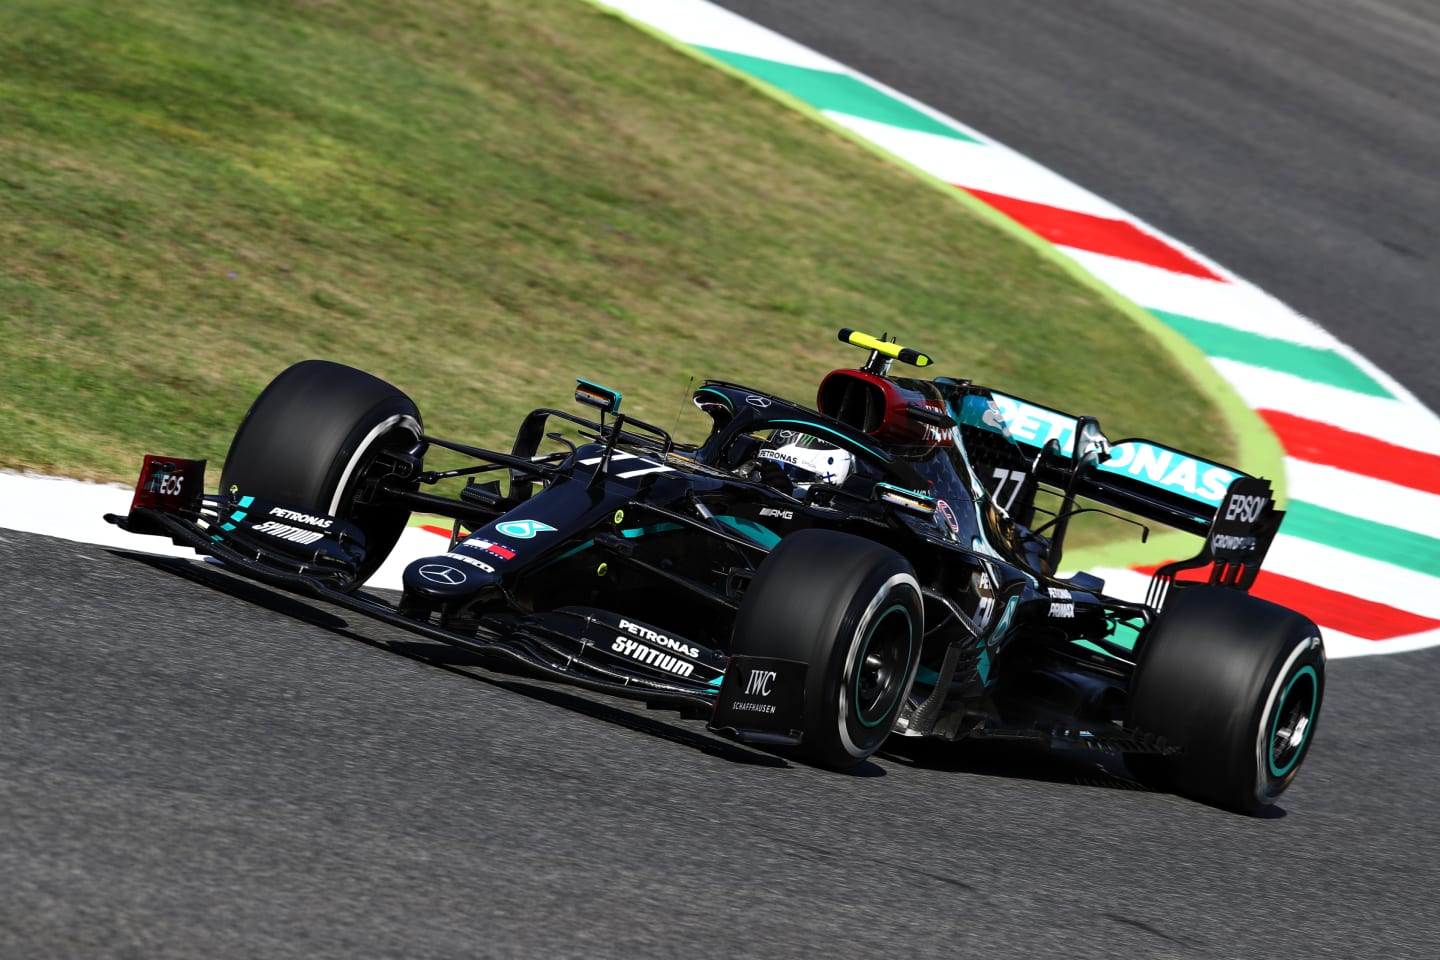 SCARPERIA, ITALY - SEPTEMBER 11: Valtteri Bottas of Finland driving the (77) Mercedes AMG Petronas